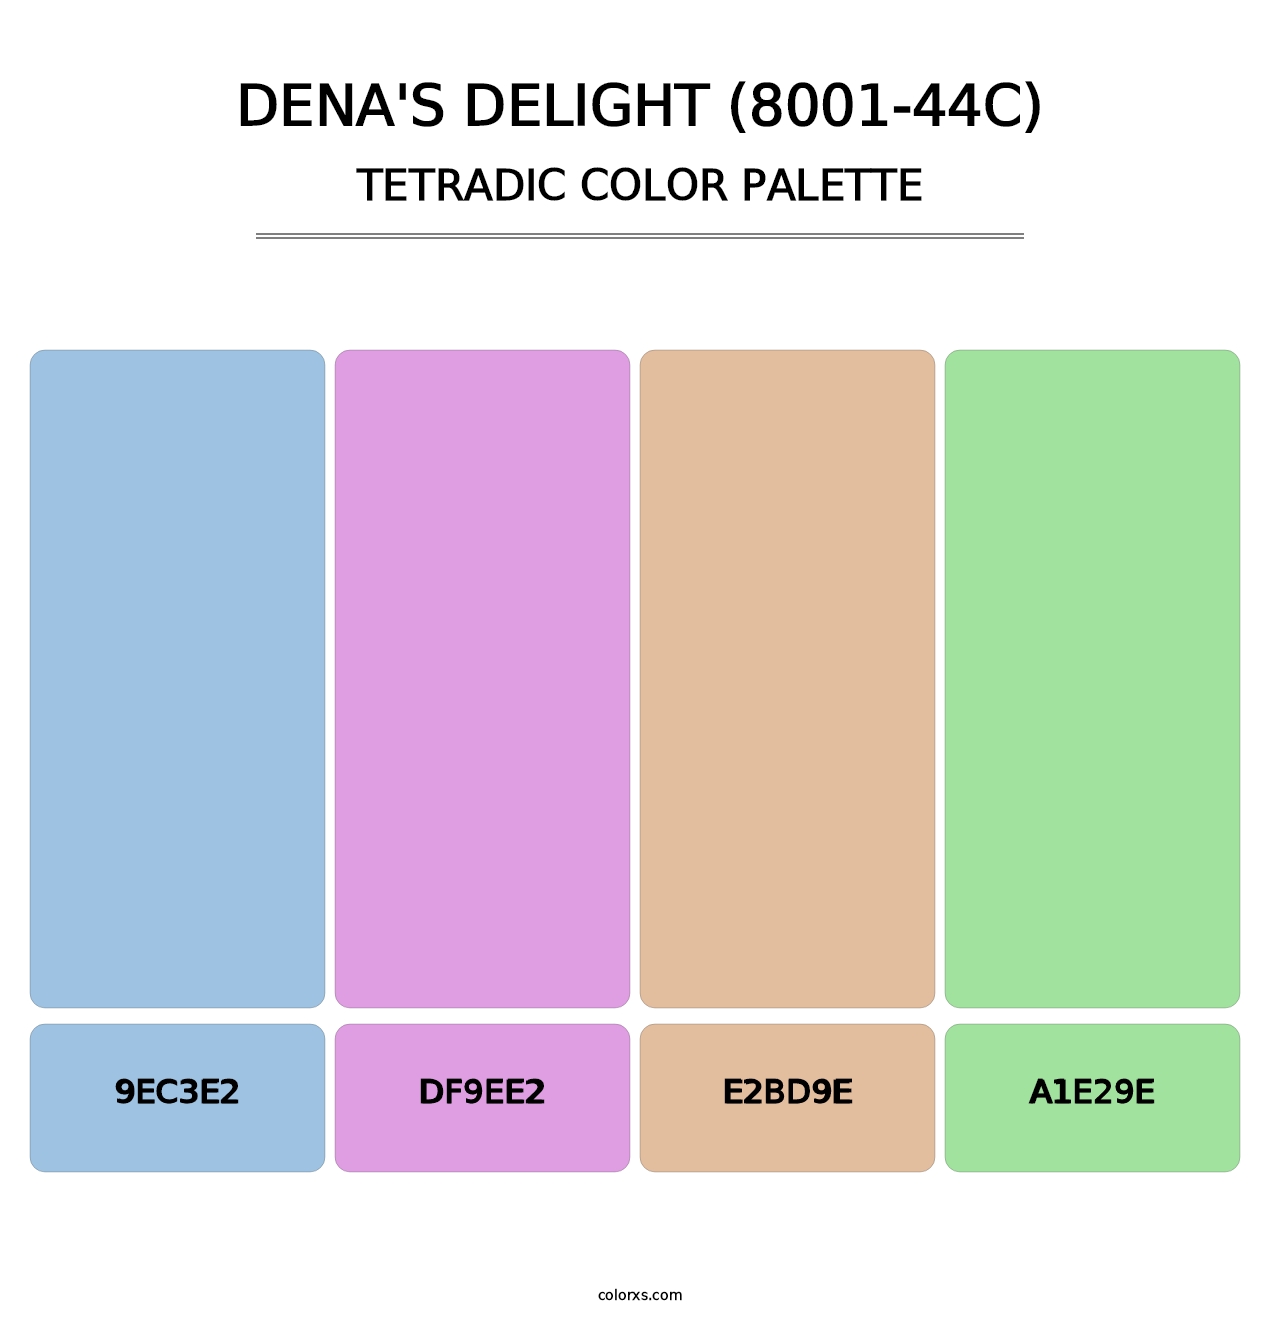 Dena's Delight (8001-44C) - Tetradic Color Palette